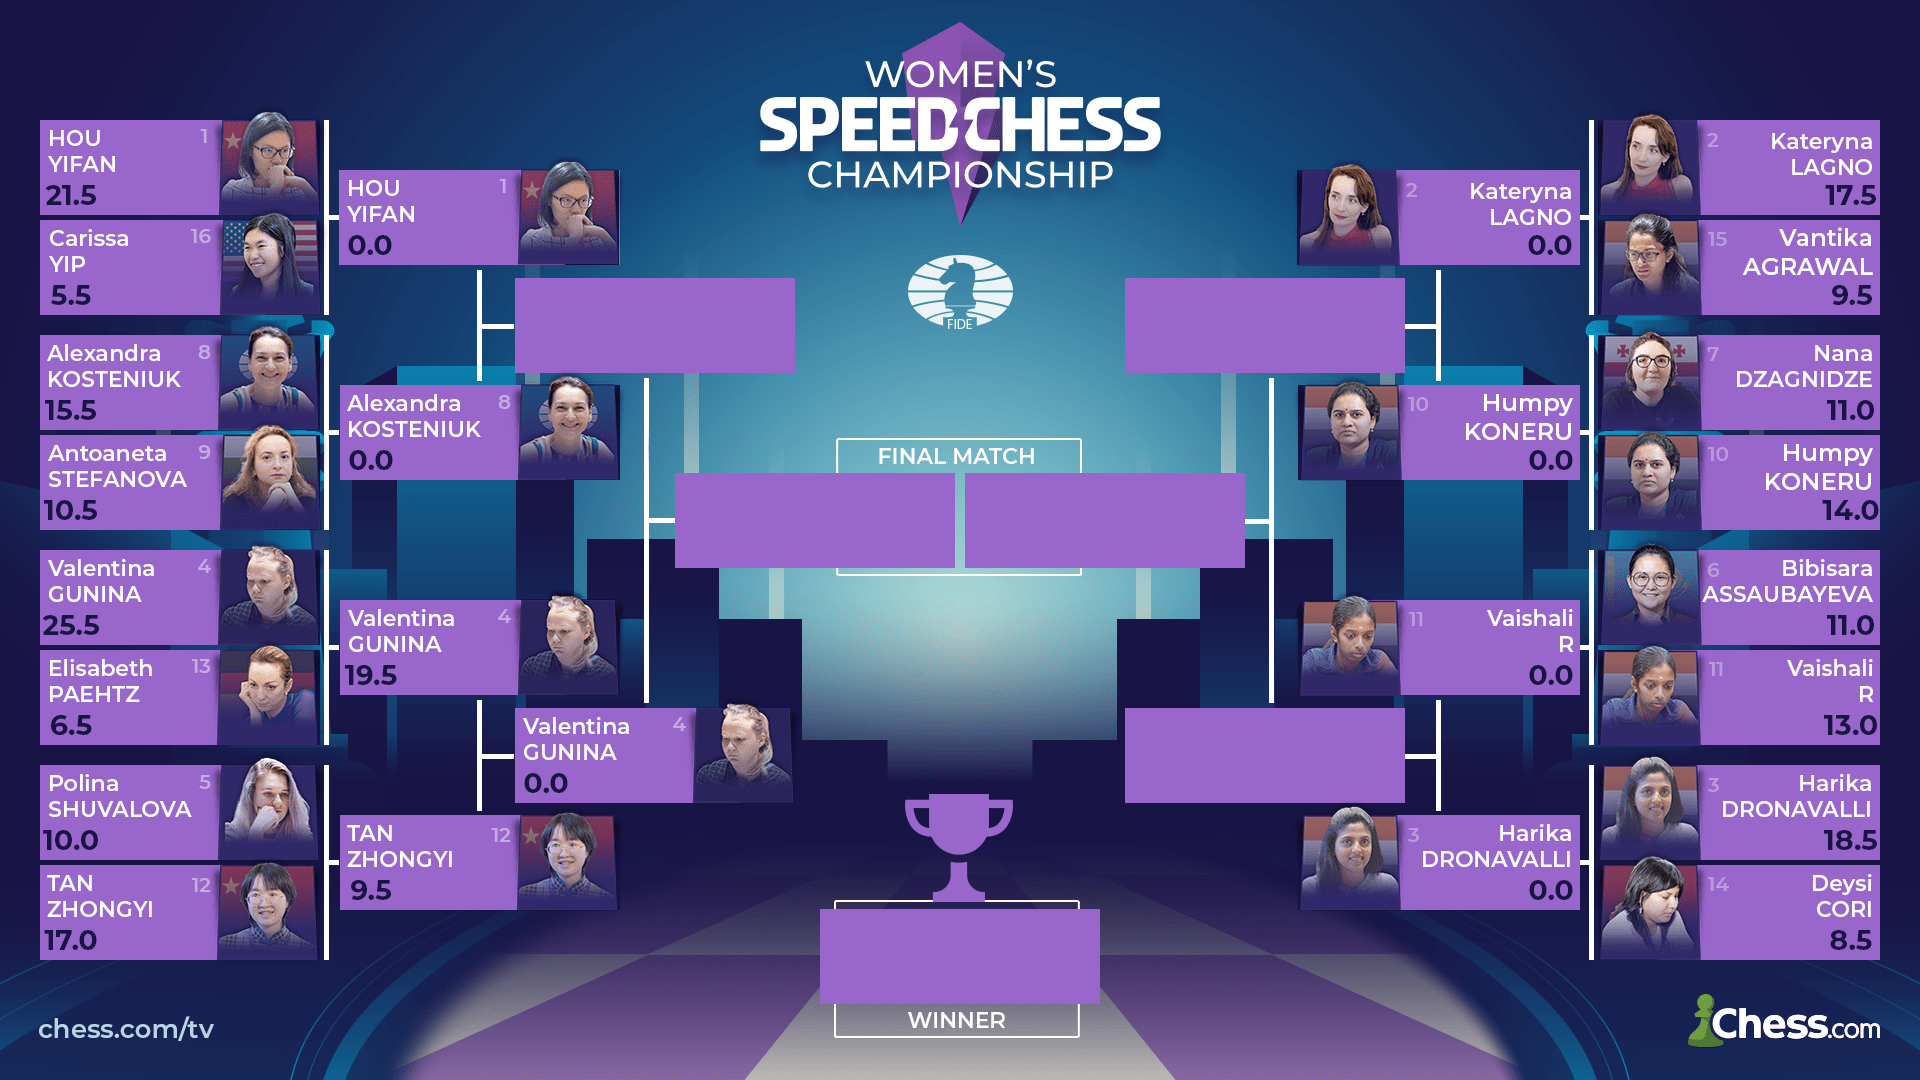 2022 Women's Speed Chess Championship Bracket